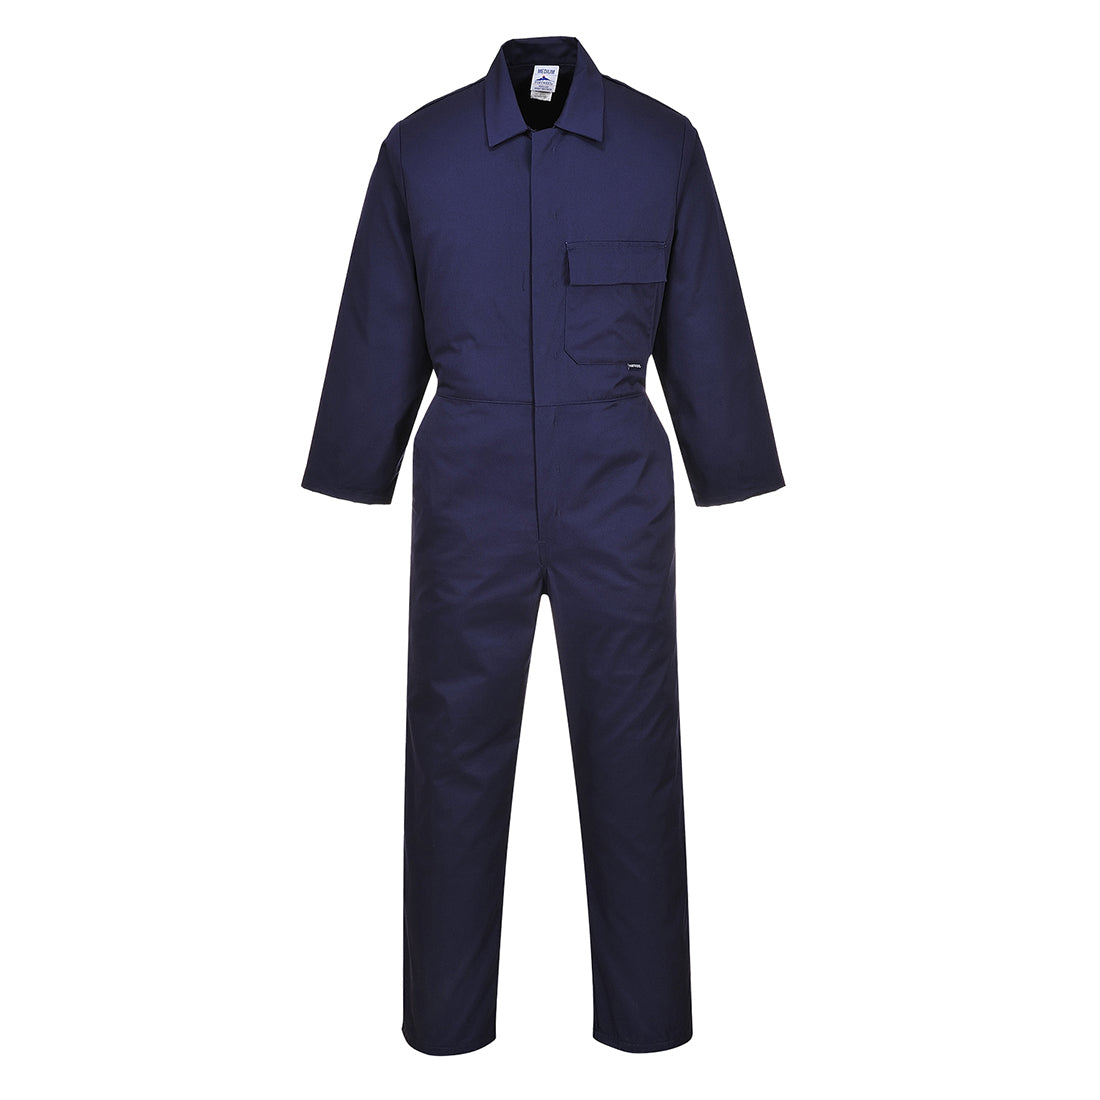 Portwest 2802 - Navy Standard Coverall boiler suit sz XSmall Regular